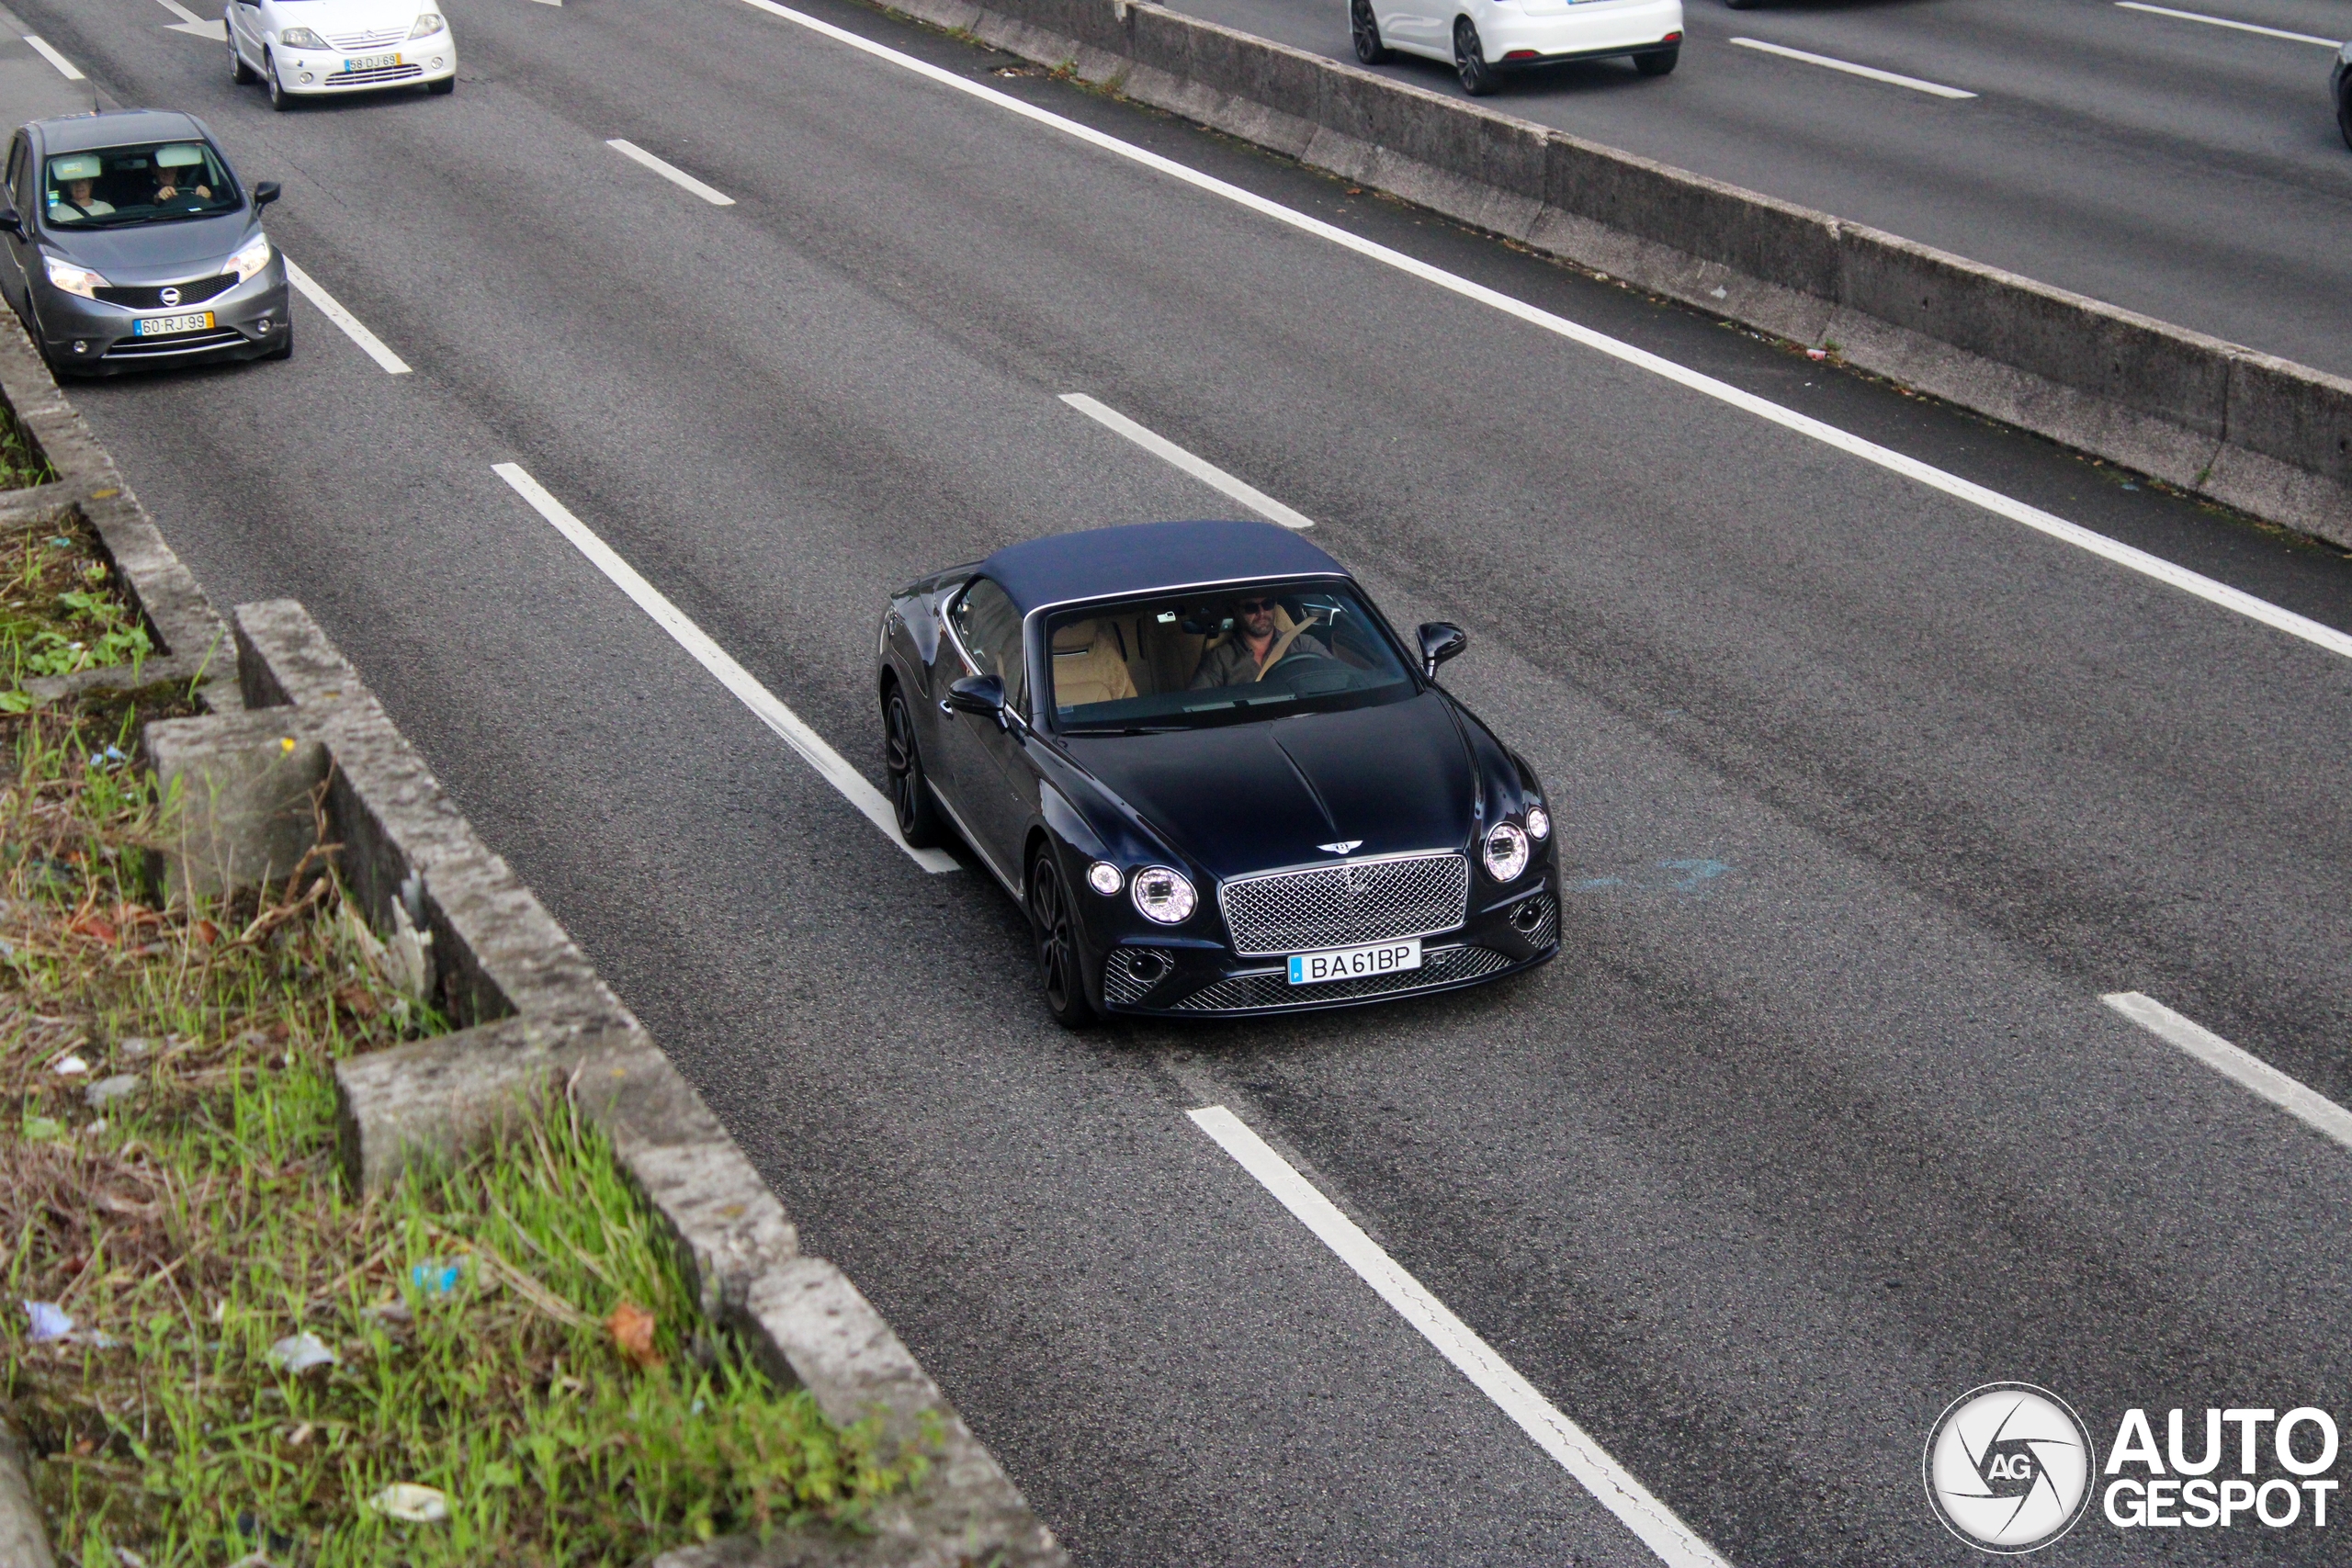 Bentley Continental GTC V8 Azure